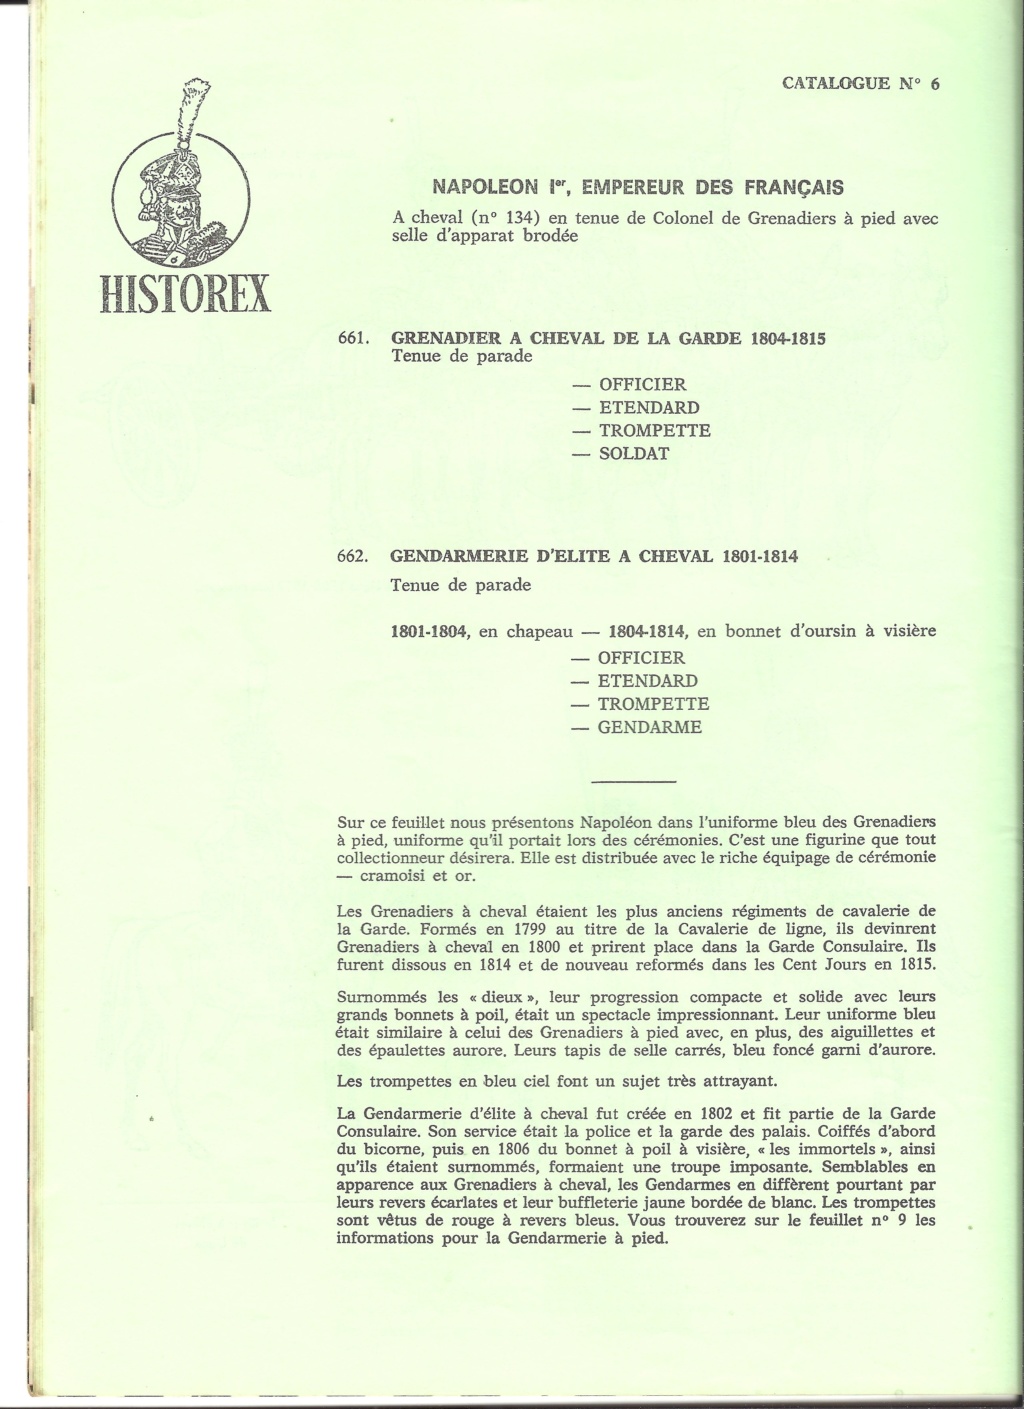 [HISTOREX 1976] Catalogue 1976  Histor29